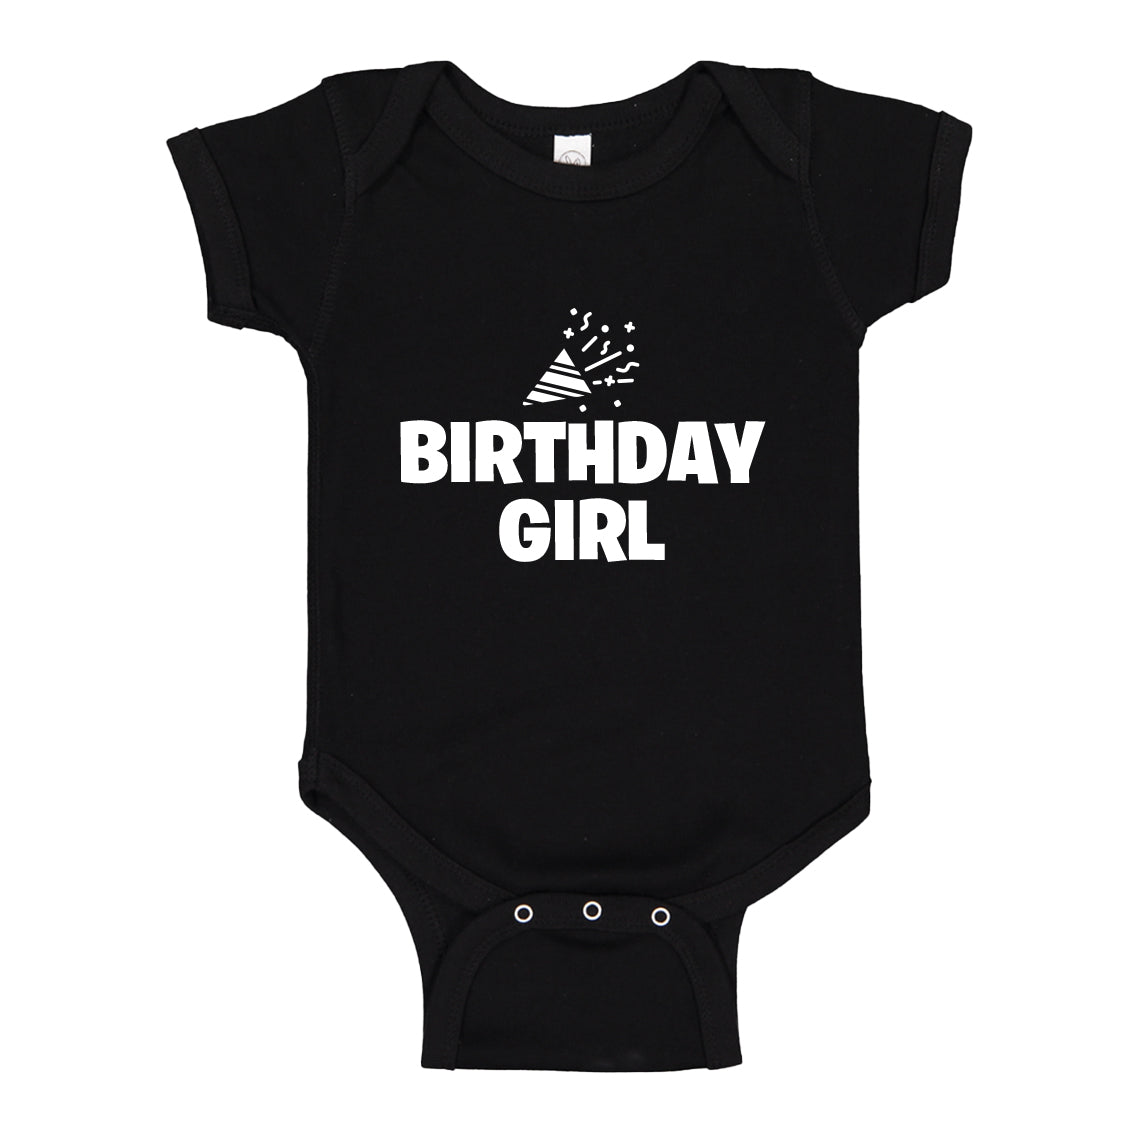 Baby Onesie Birthday Girl 100% Cotton Infant Bodysuit